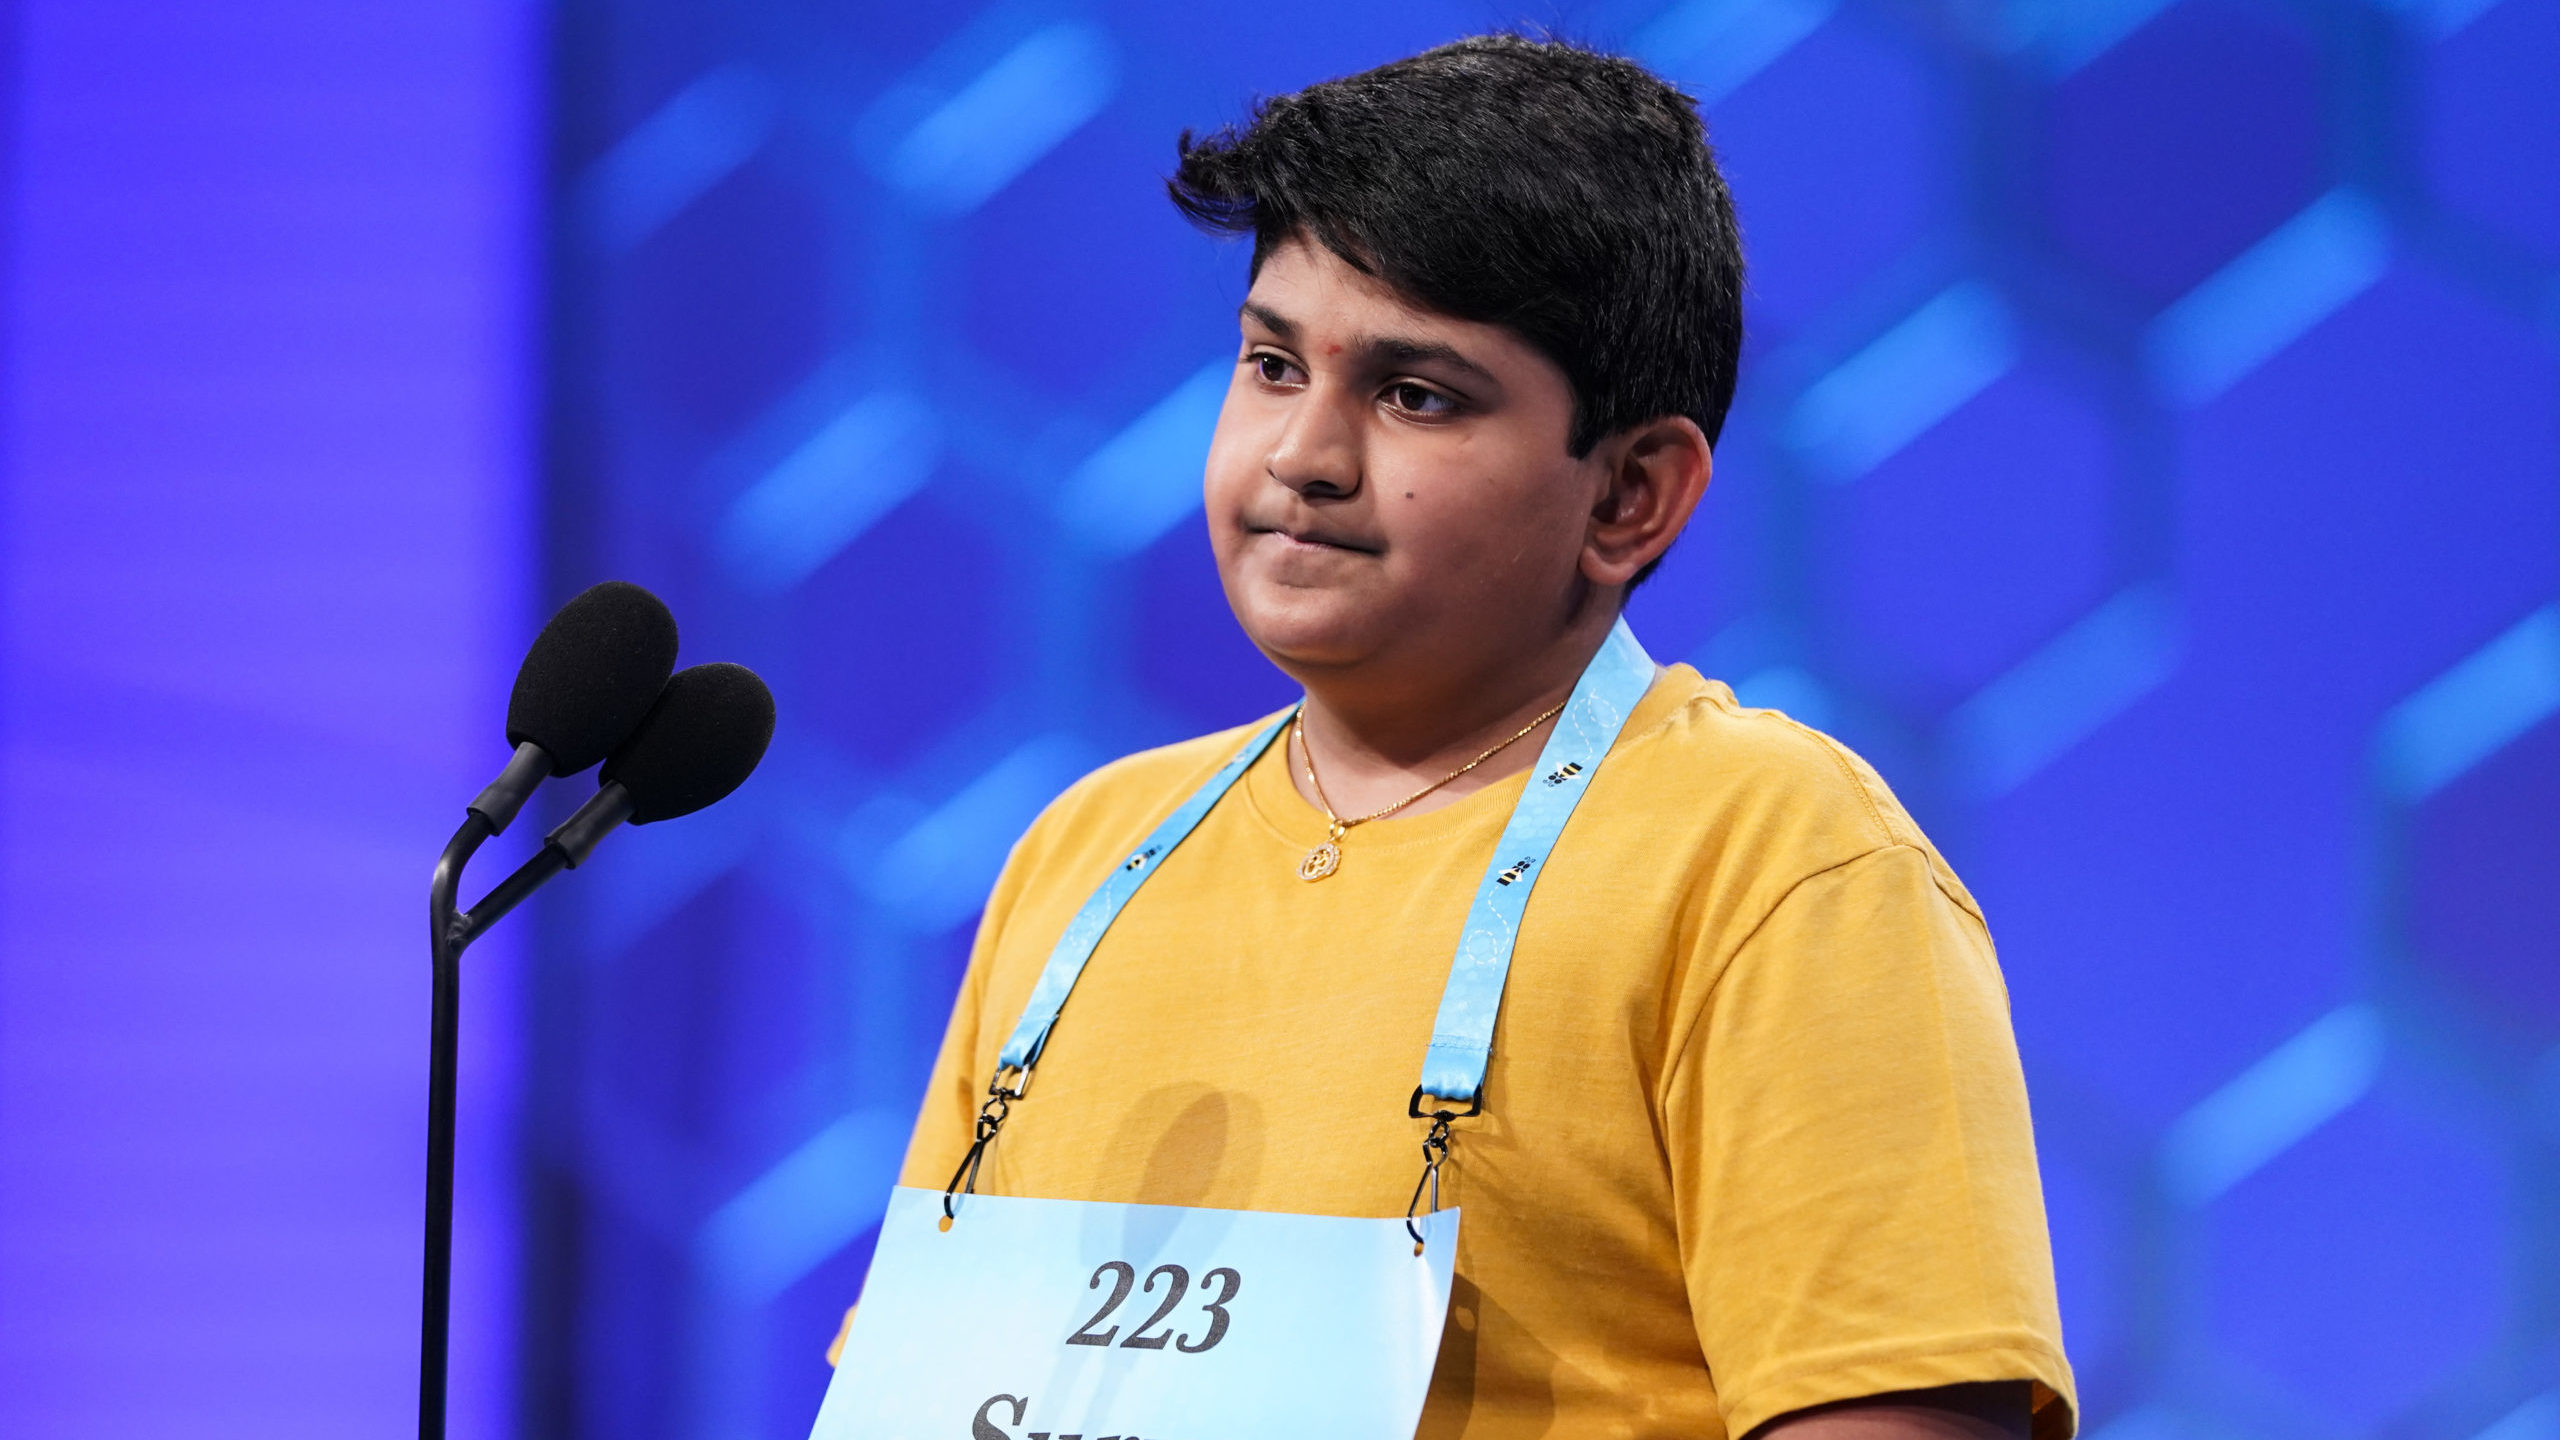 Surya Kapu, 13, from South Jordan, Utah, competes during the Scripps National Spelling Bee, Wednesd...